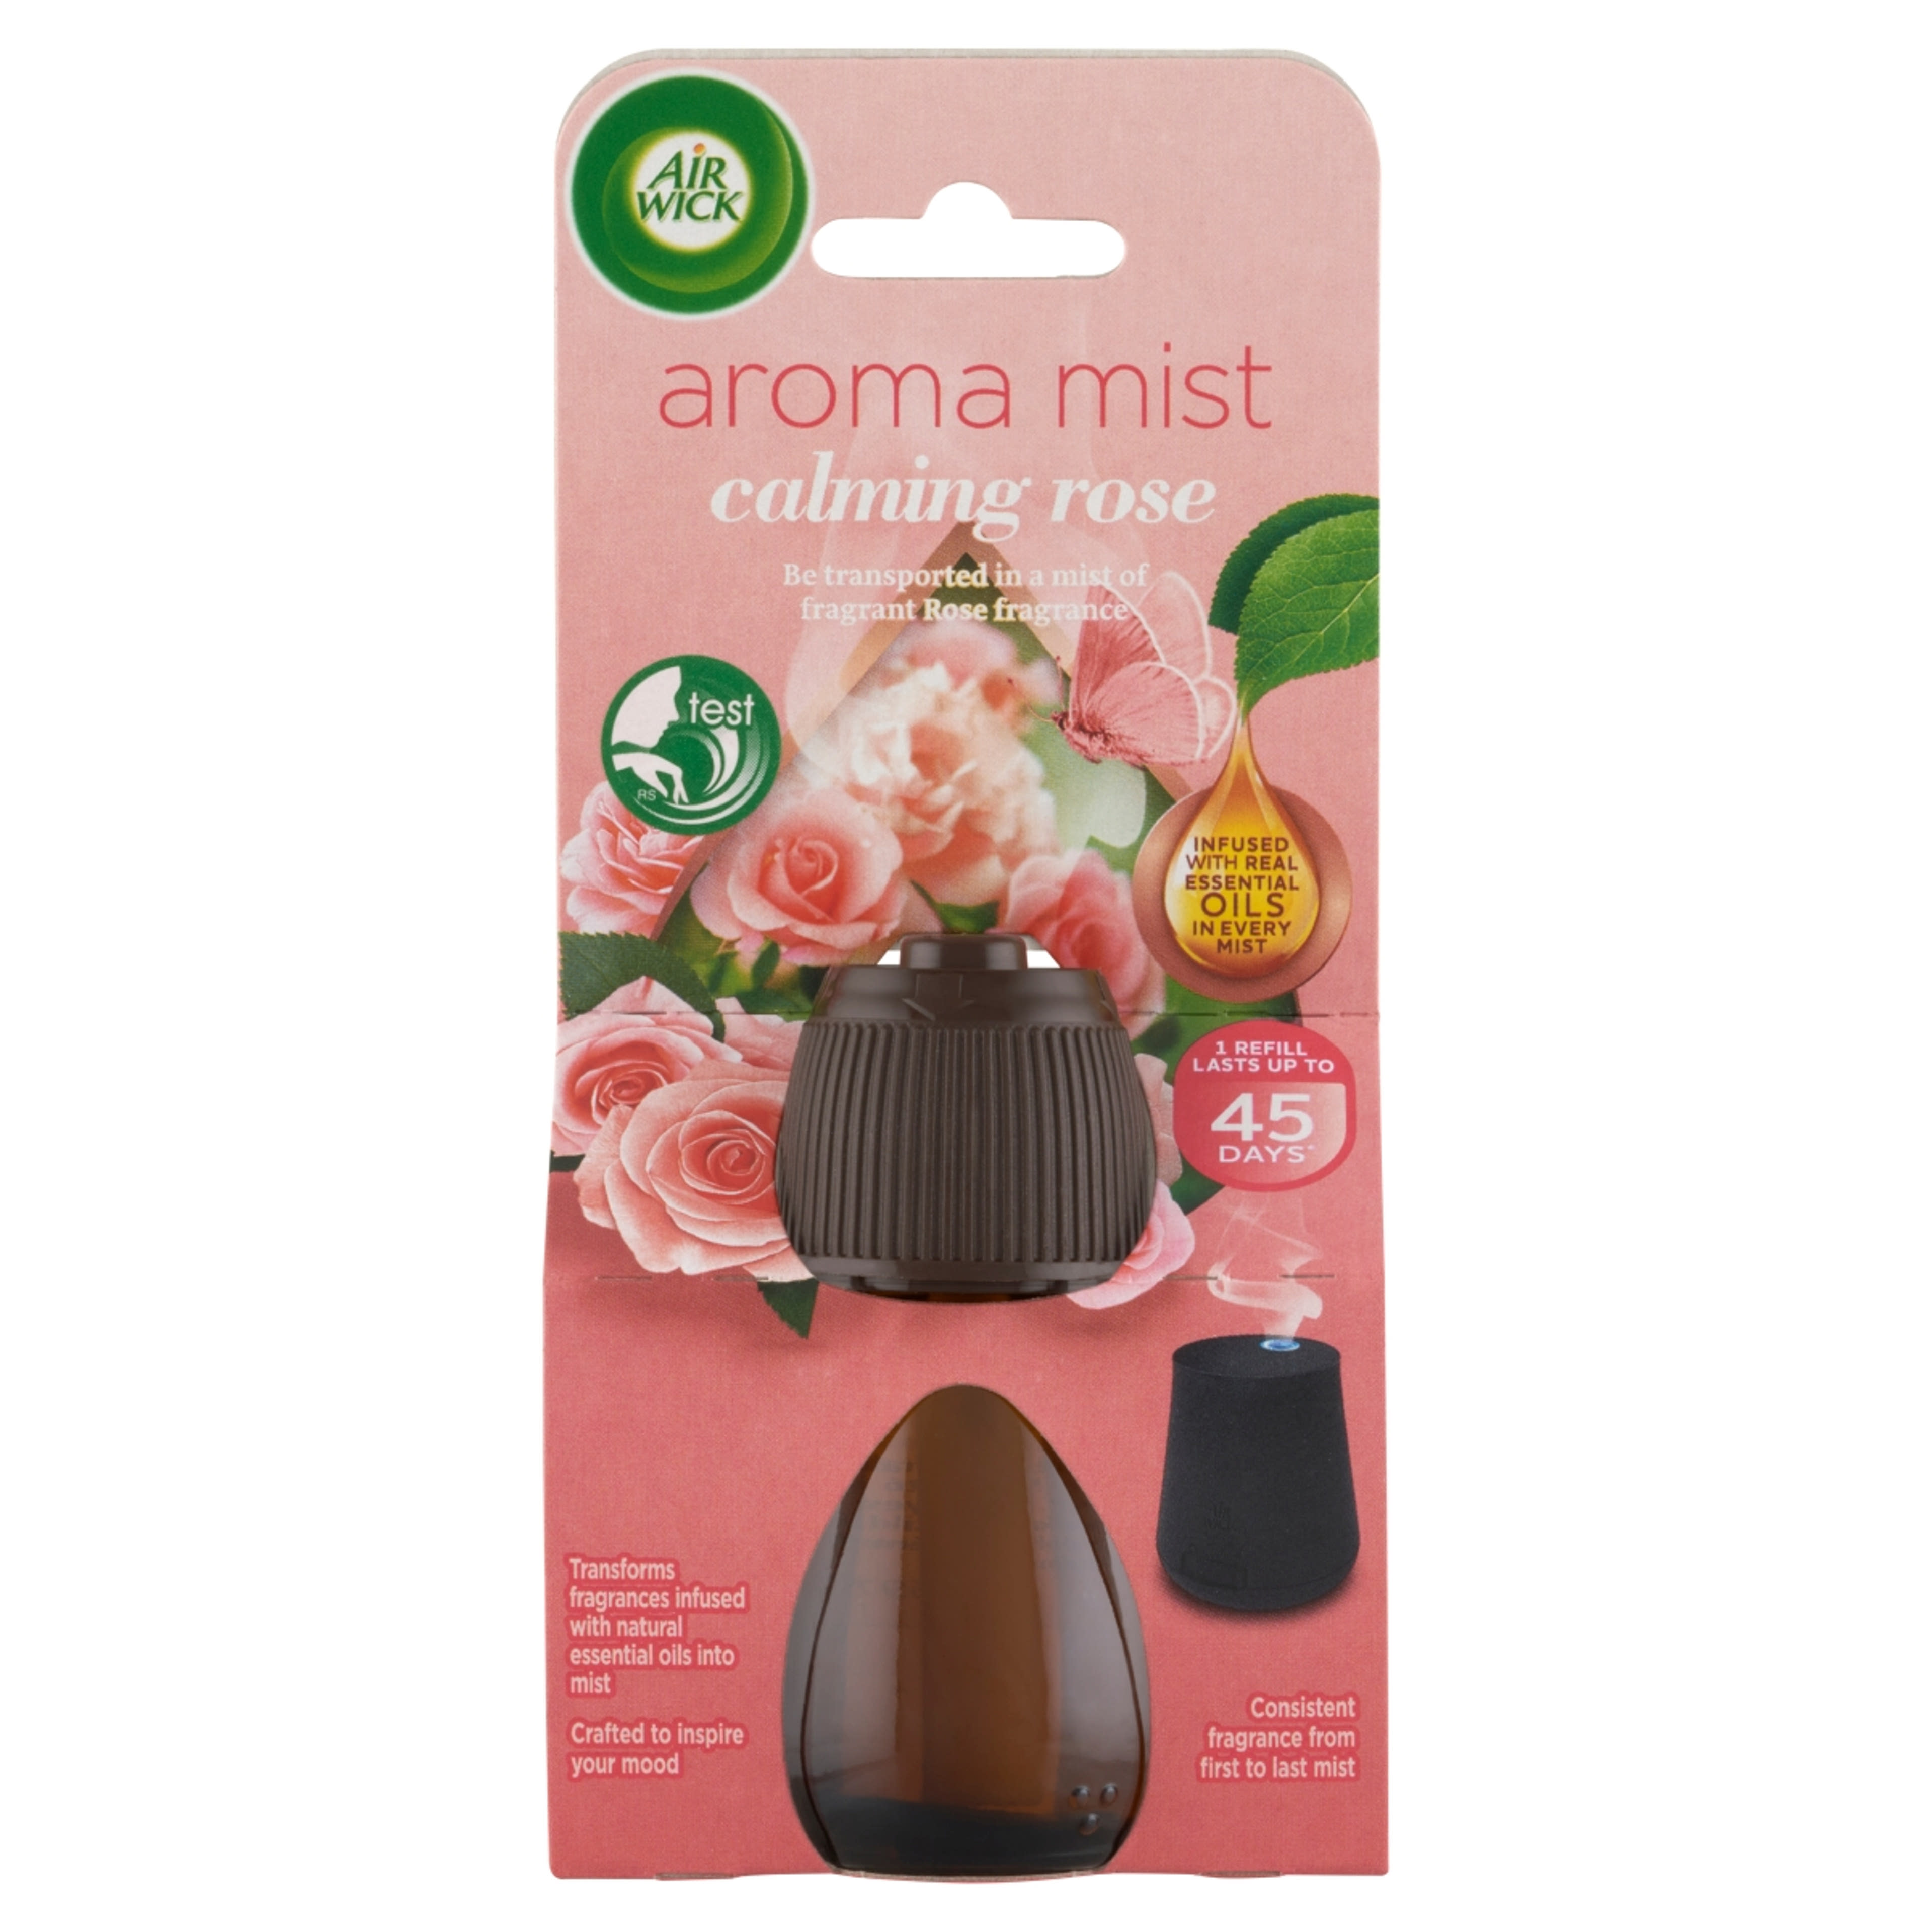 Air Wick Aroma Mist Nyugtató rózsa illat aroma diffúzor utántöltő - 20 ml